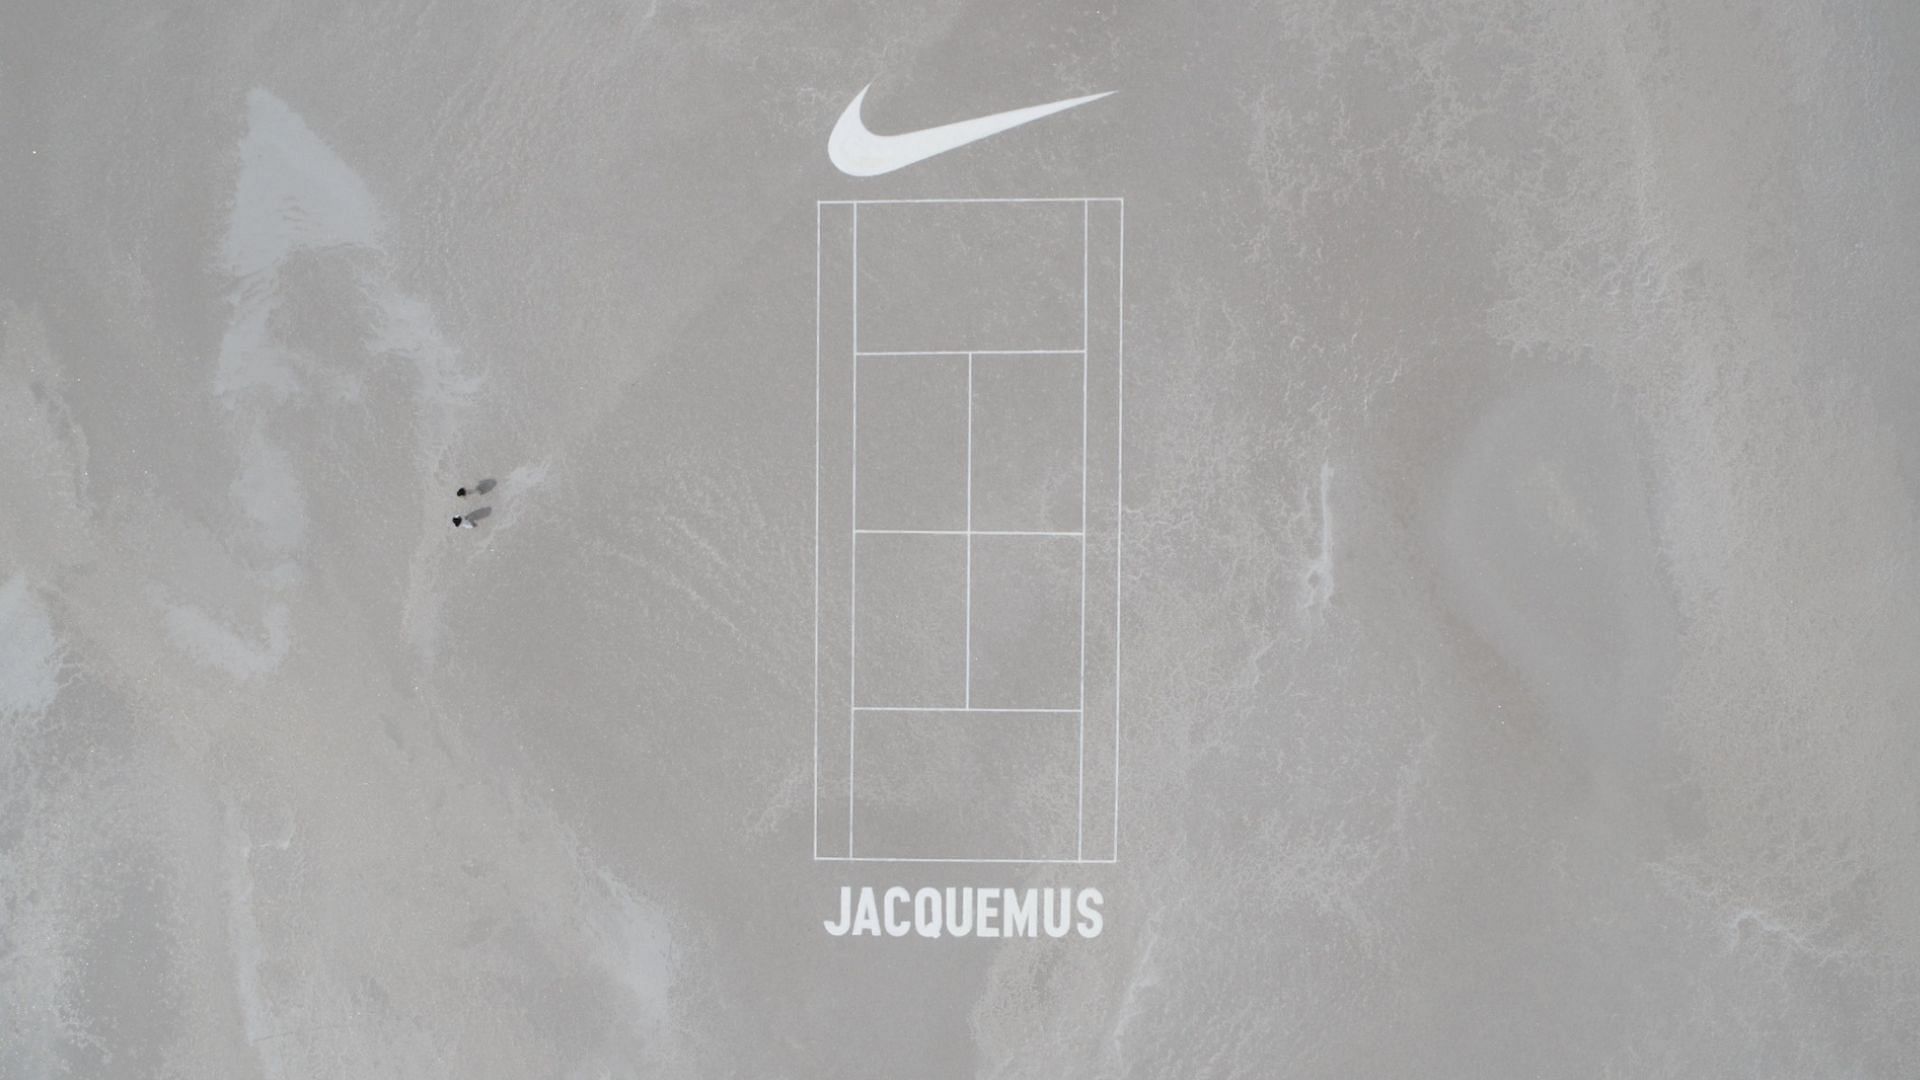 Nike x Jacquemus collaboration (Image via Nike)